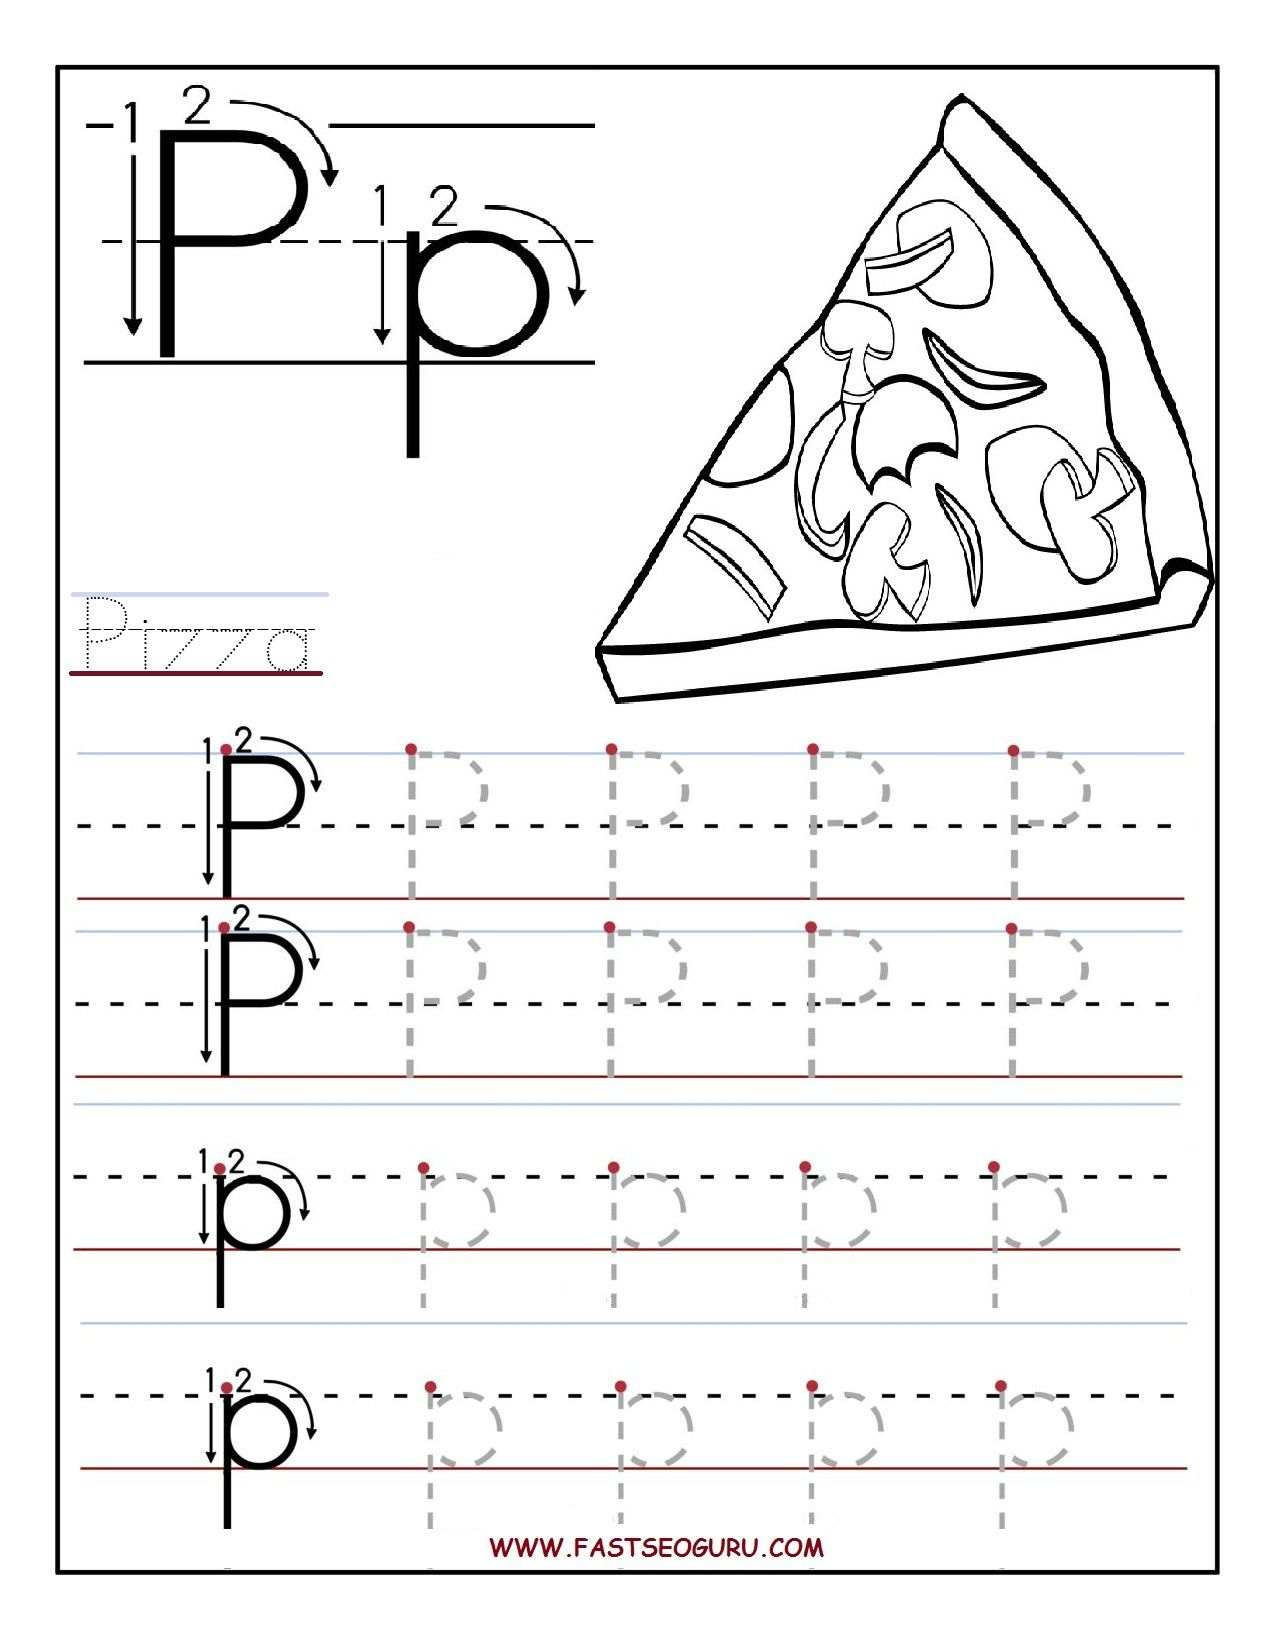 Printable Letter P Tracing Worksheets For Preschool jpg 1 275 1 650 